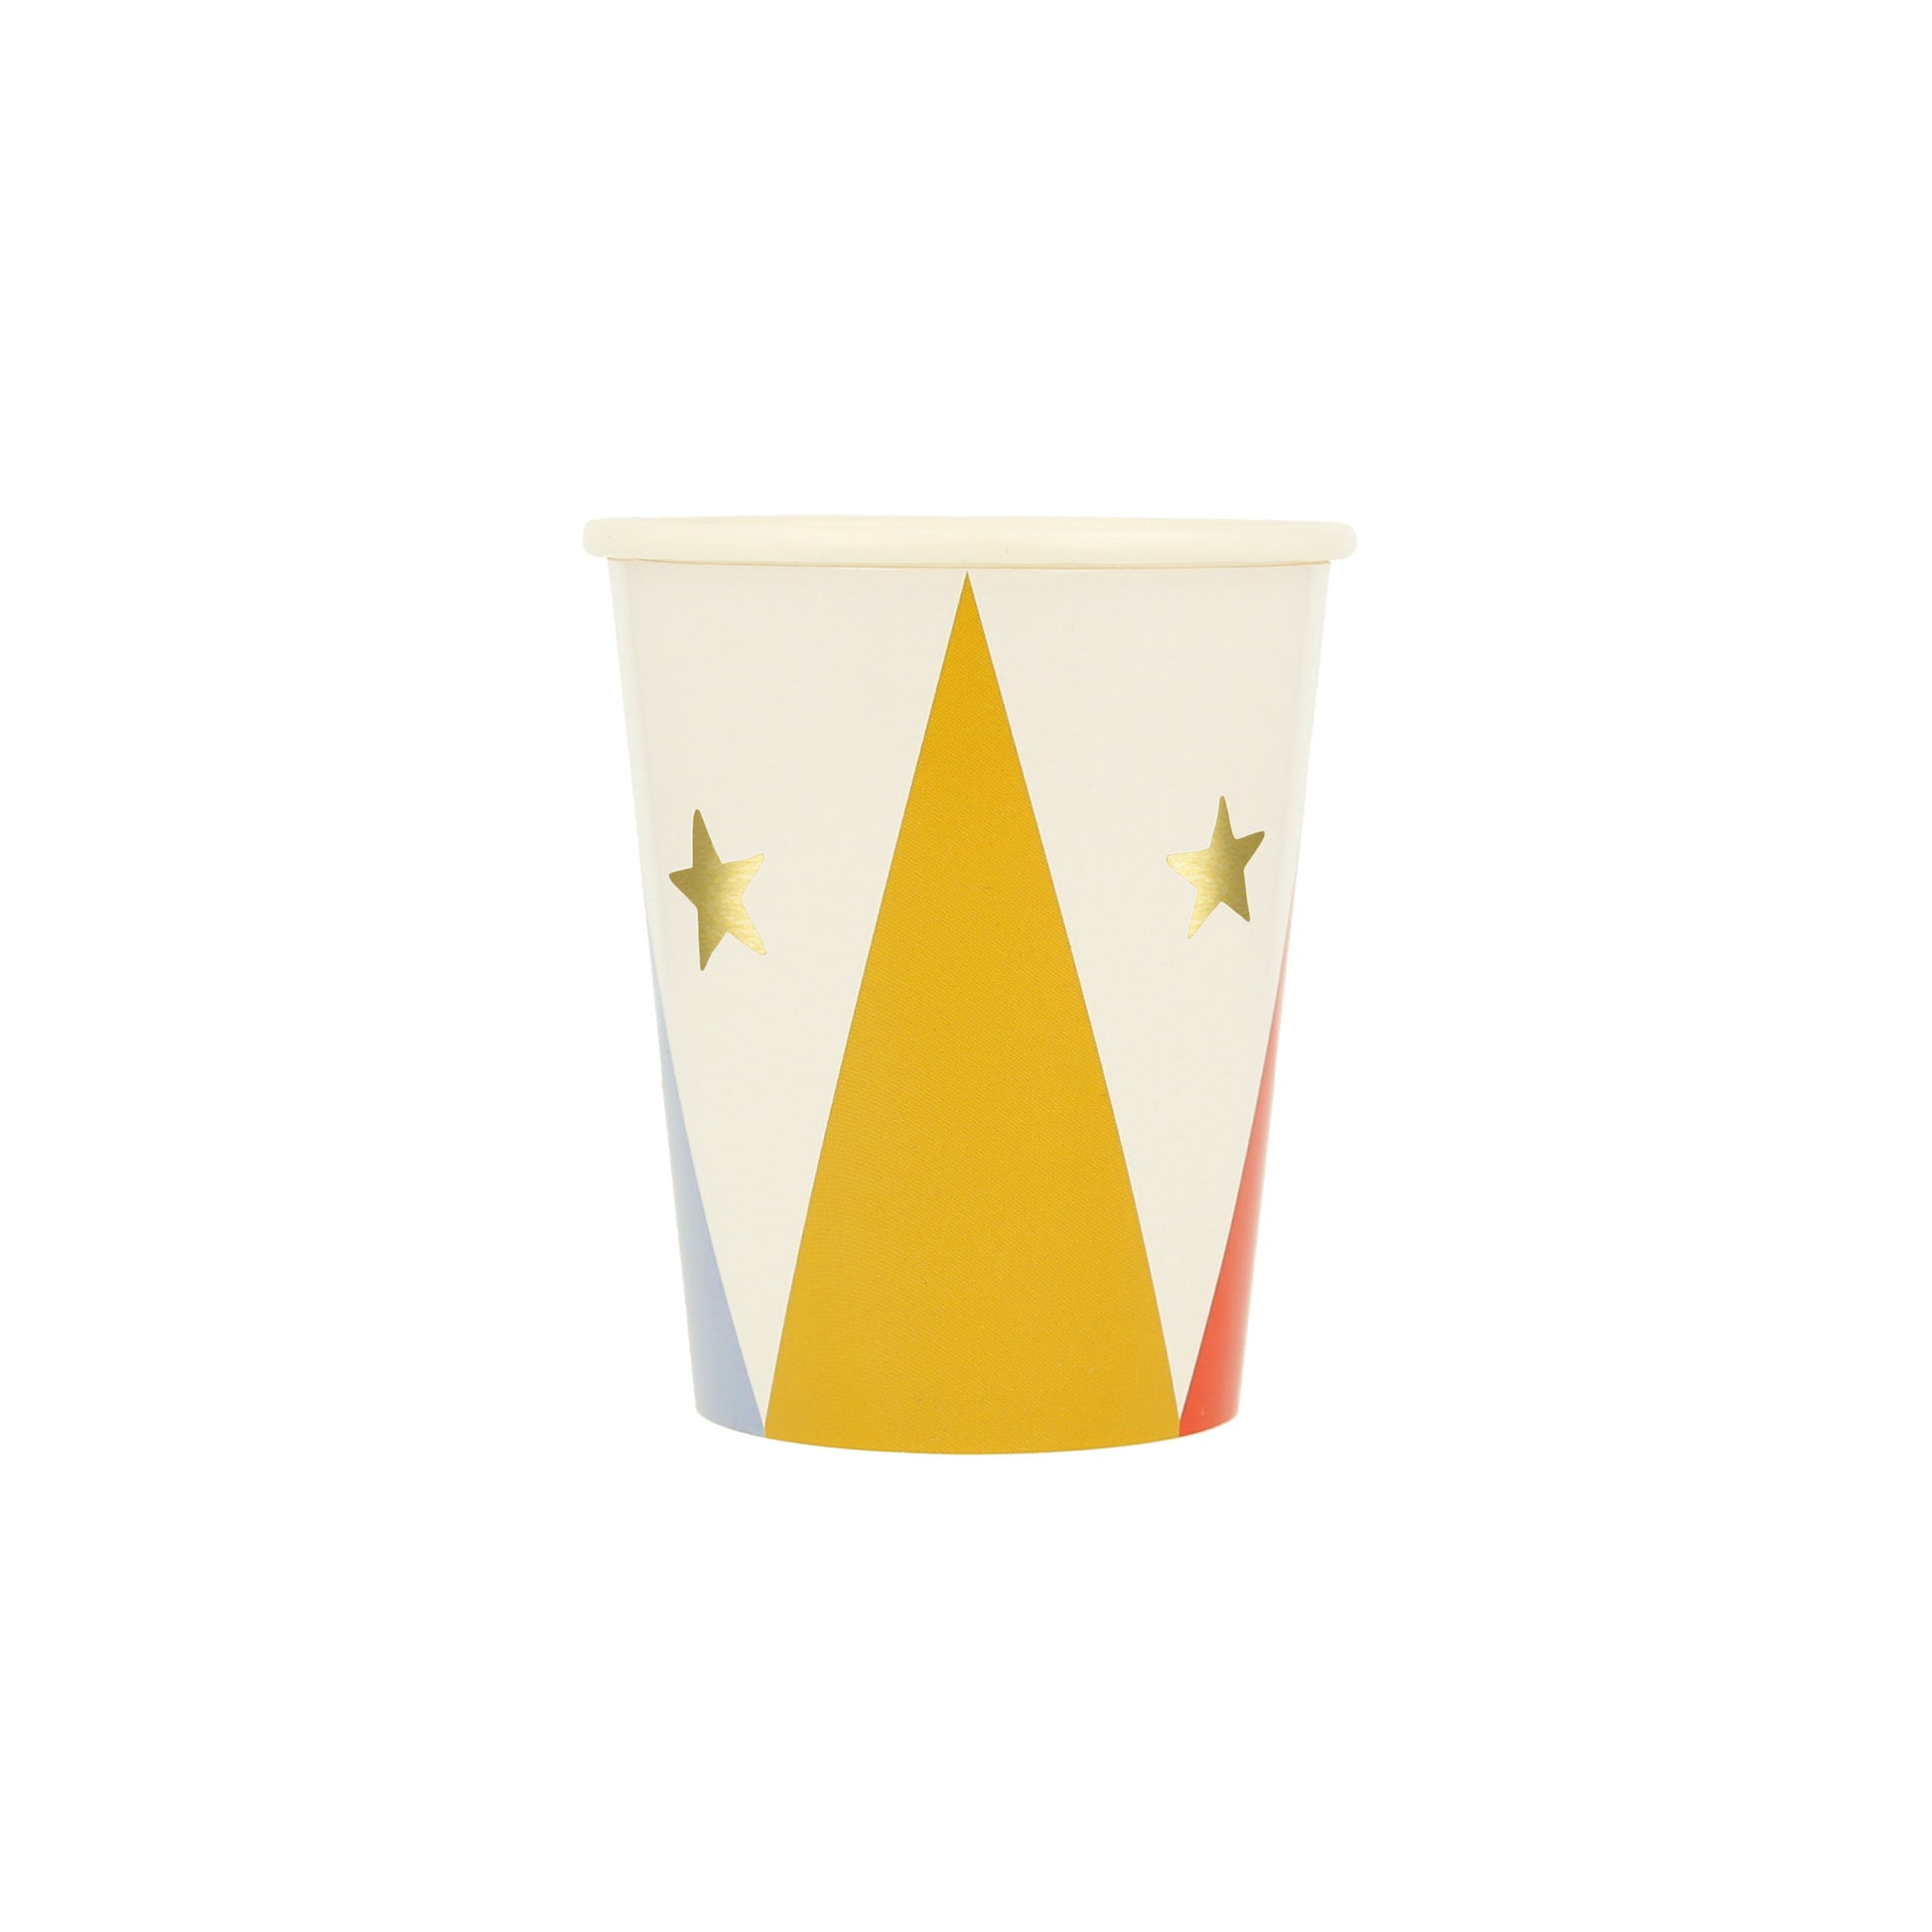 circus cups by meri meri - pack of 8 in 8 designs 